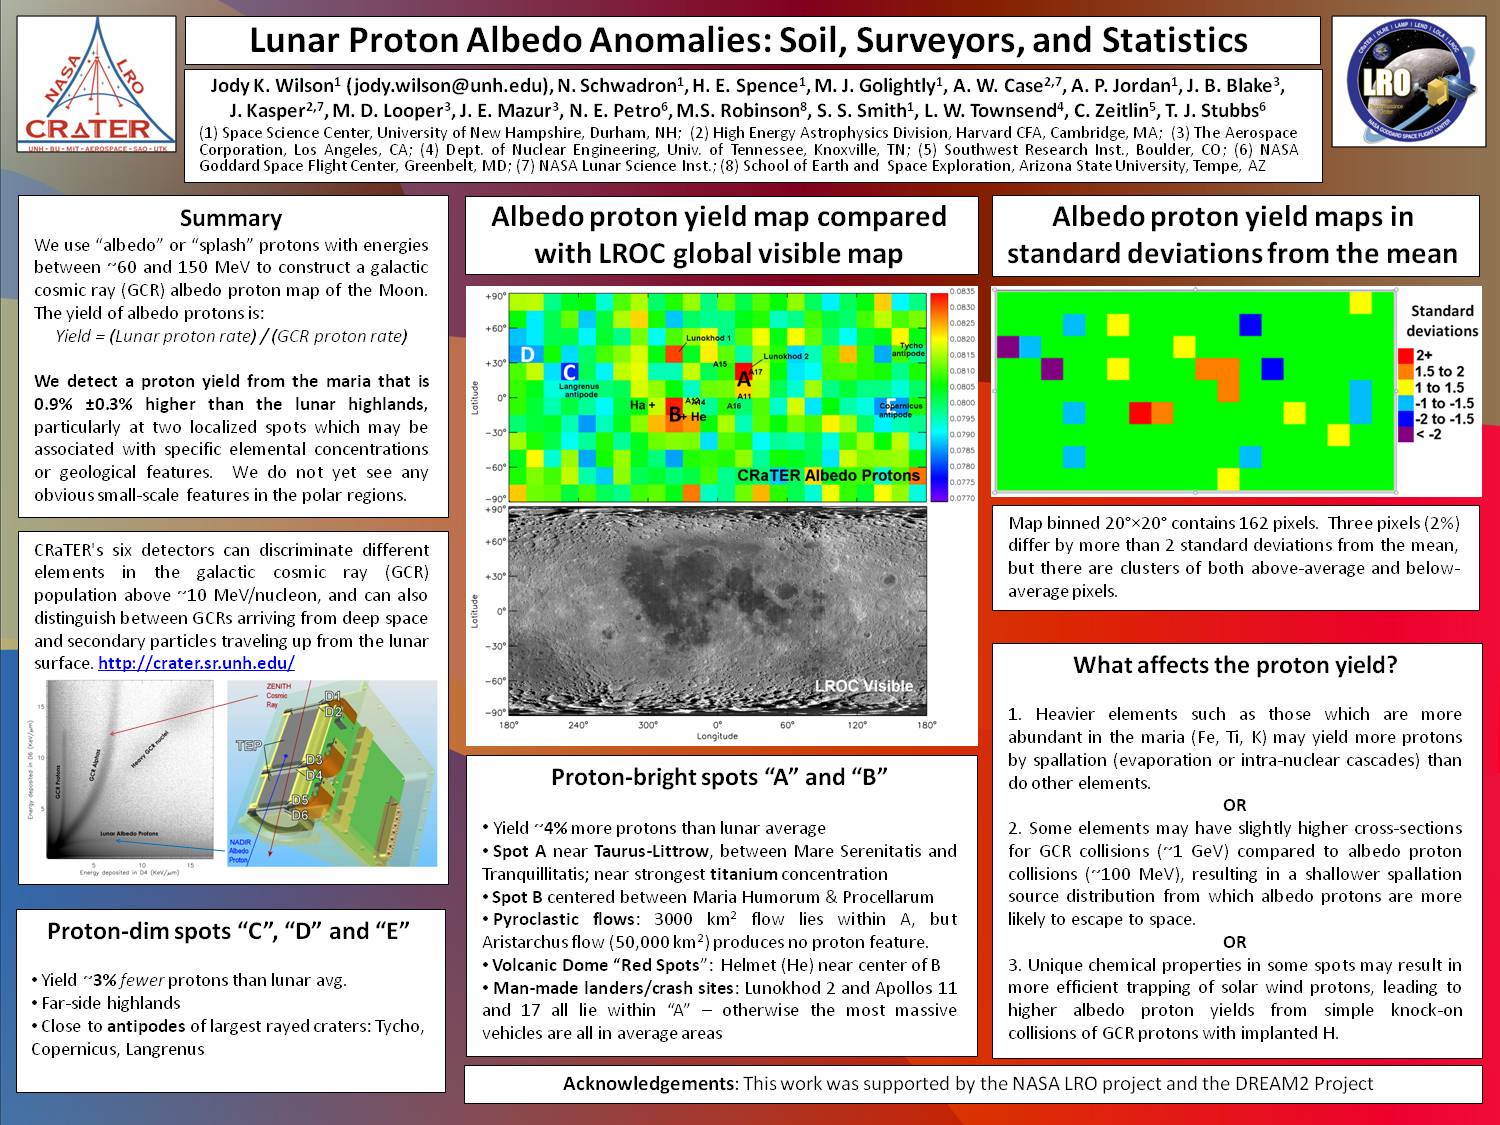 Lunar Proton Albedo Anomalies: Soil, Surveyors, And Statistics by jkwilson